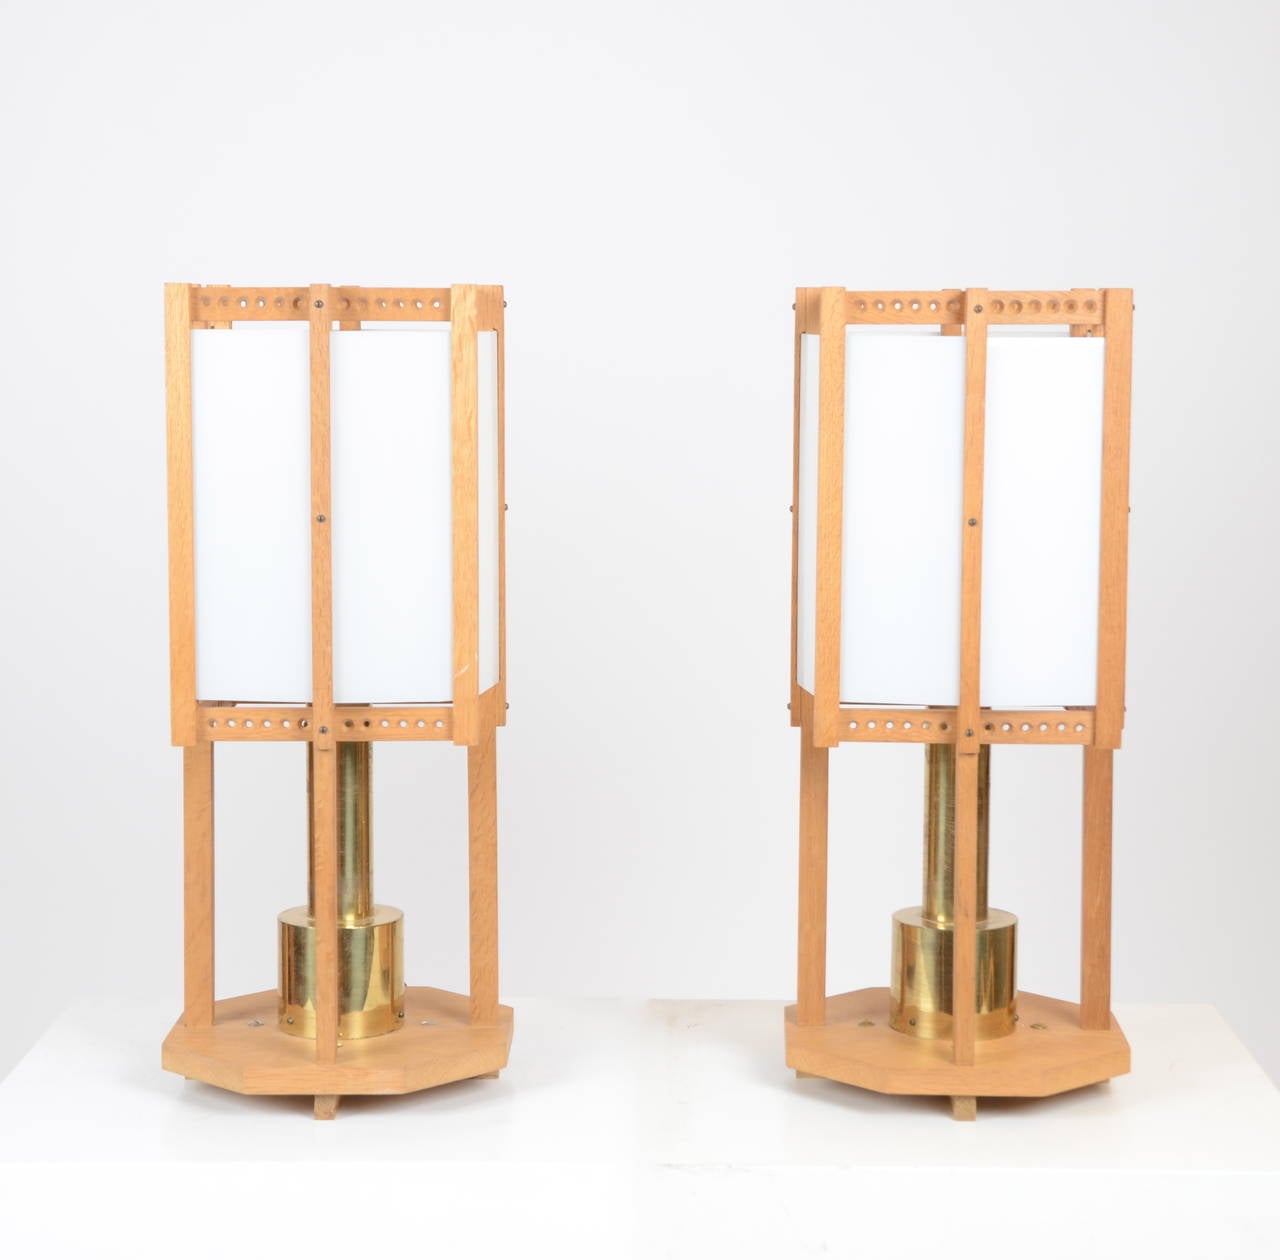 A pair of table lamps, designed for St Nicolai chapel in Helsingborg, Sweden, by John Kandell, 1956. Made by carpenter David Sjölinder.  

Lit: Gunilla Lundahl, John Kandell: Balanskonstnär, Raster, STHLM, 1992.